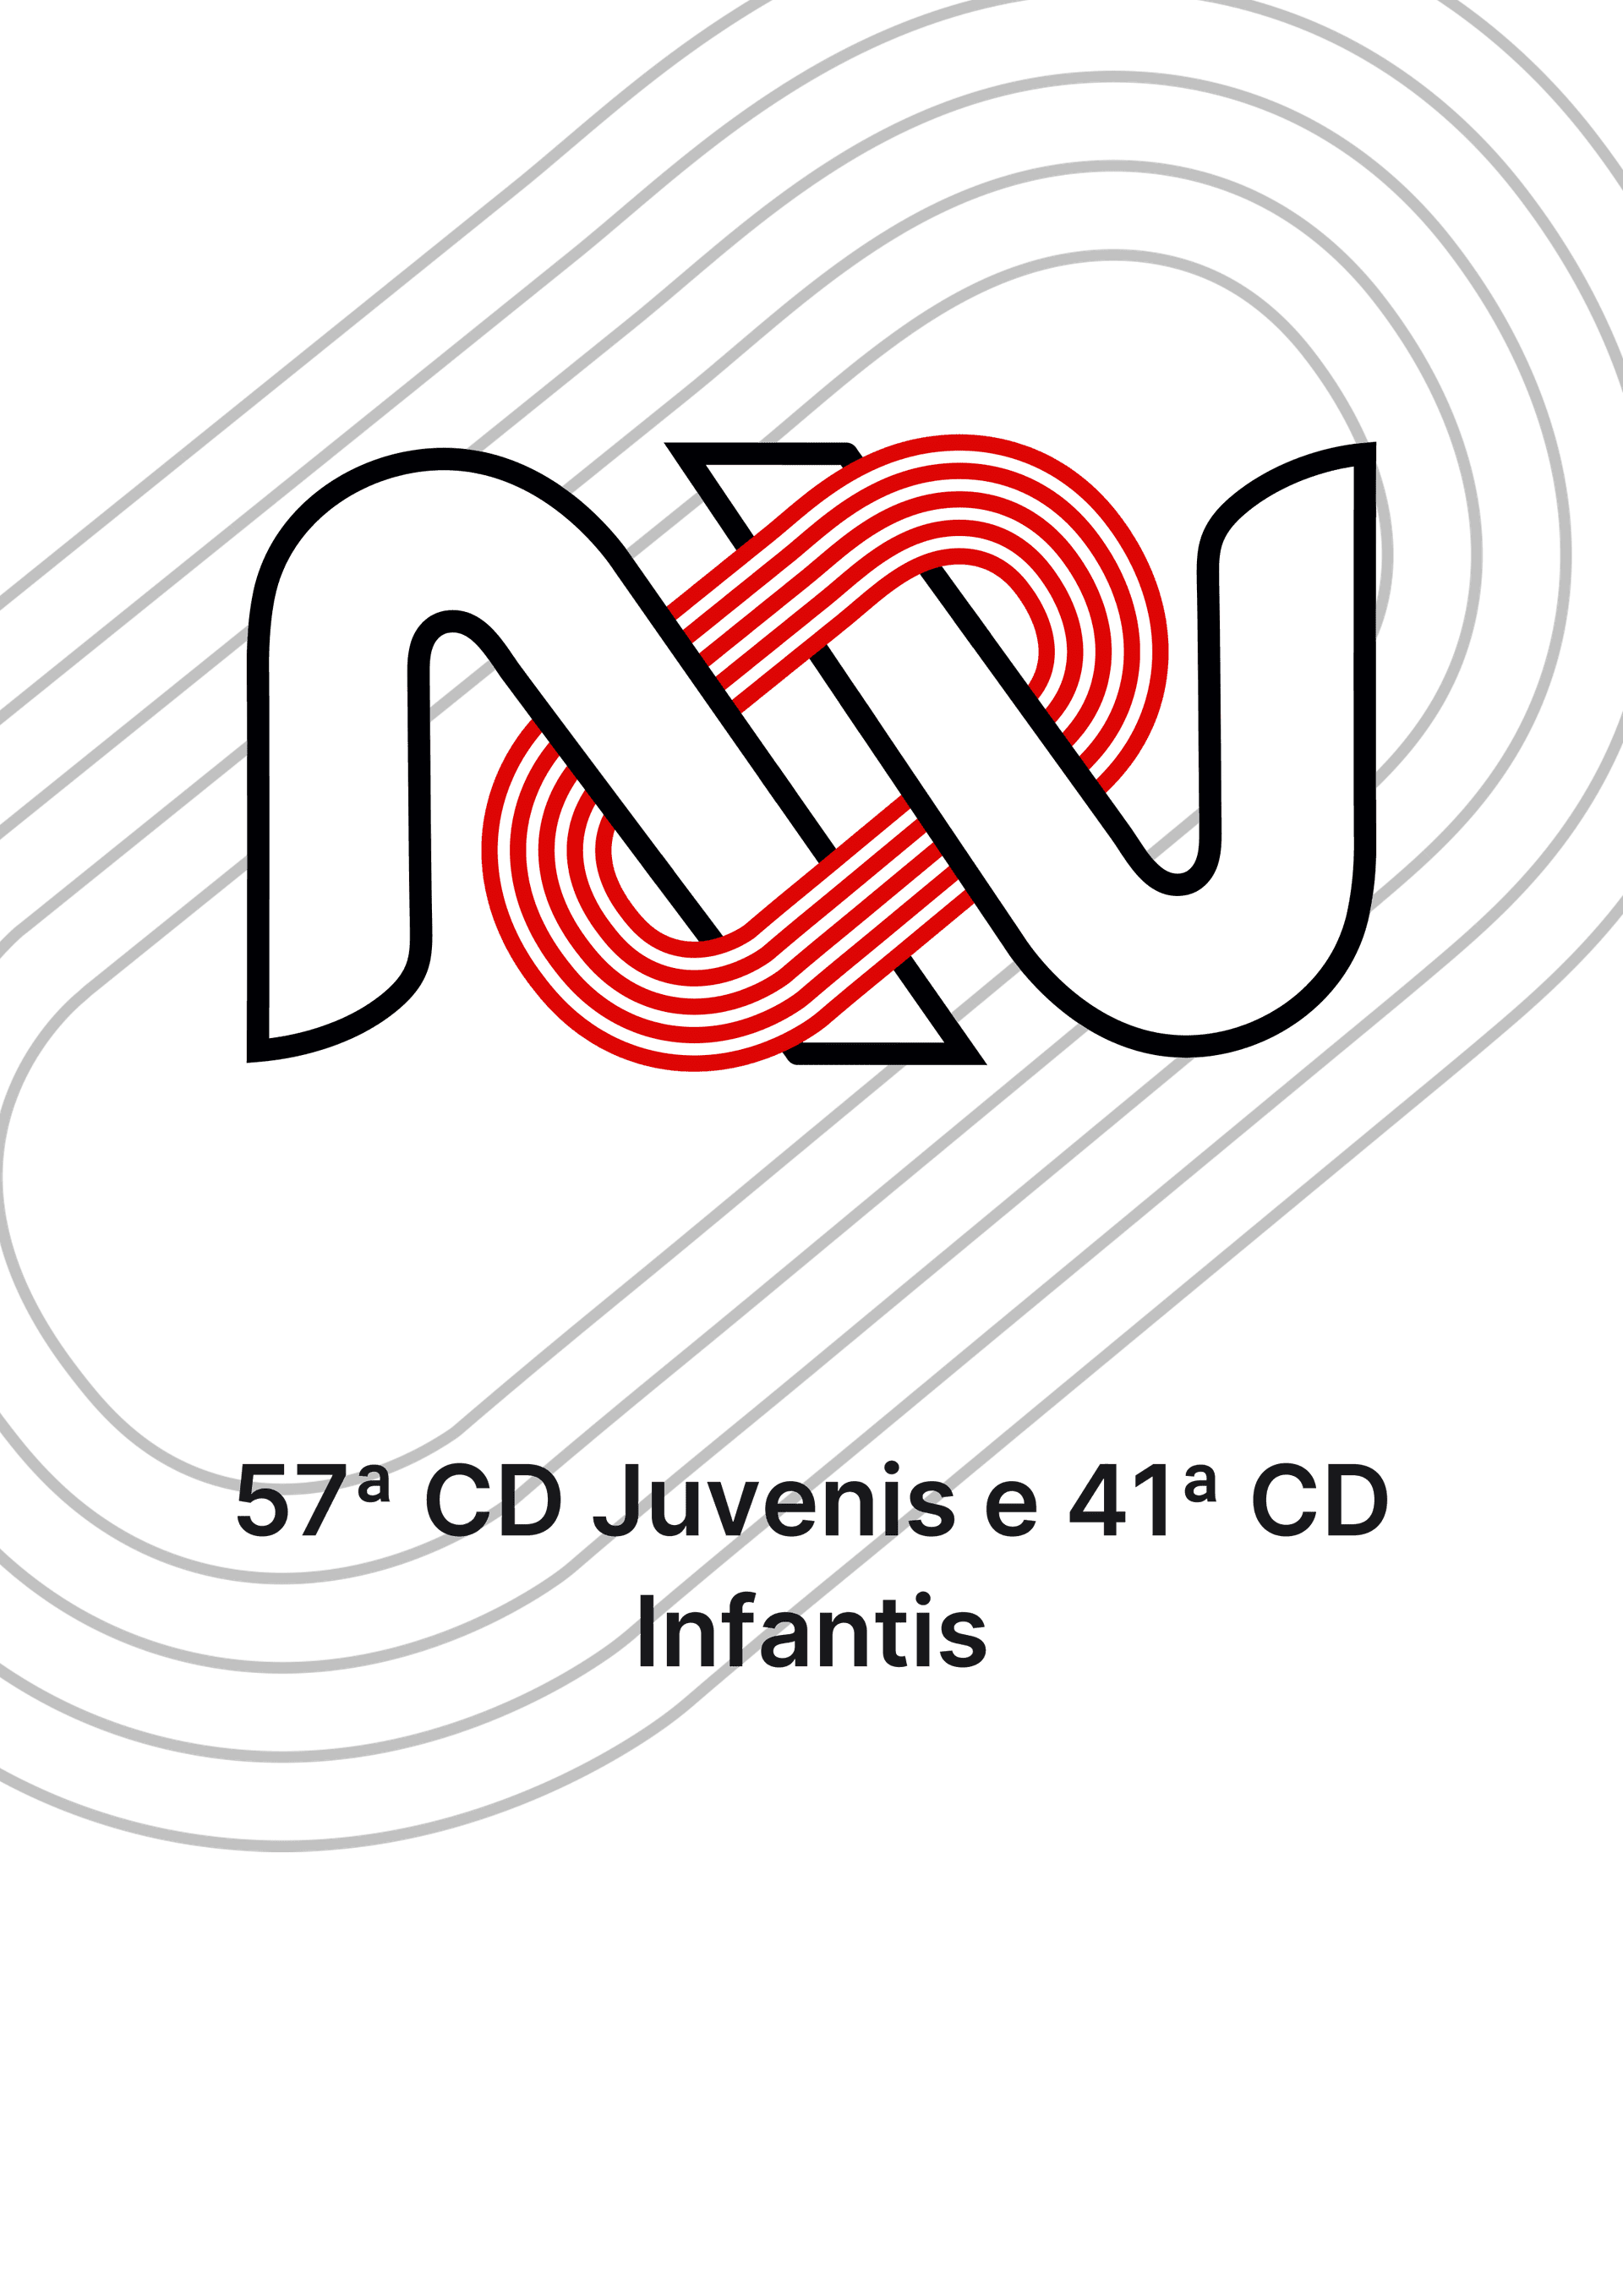 57ª CD Juvenis e 41ª CD Infantis